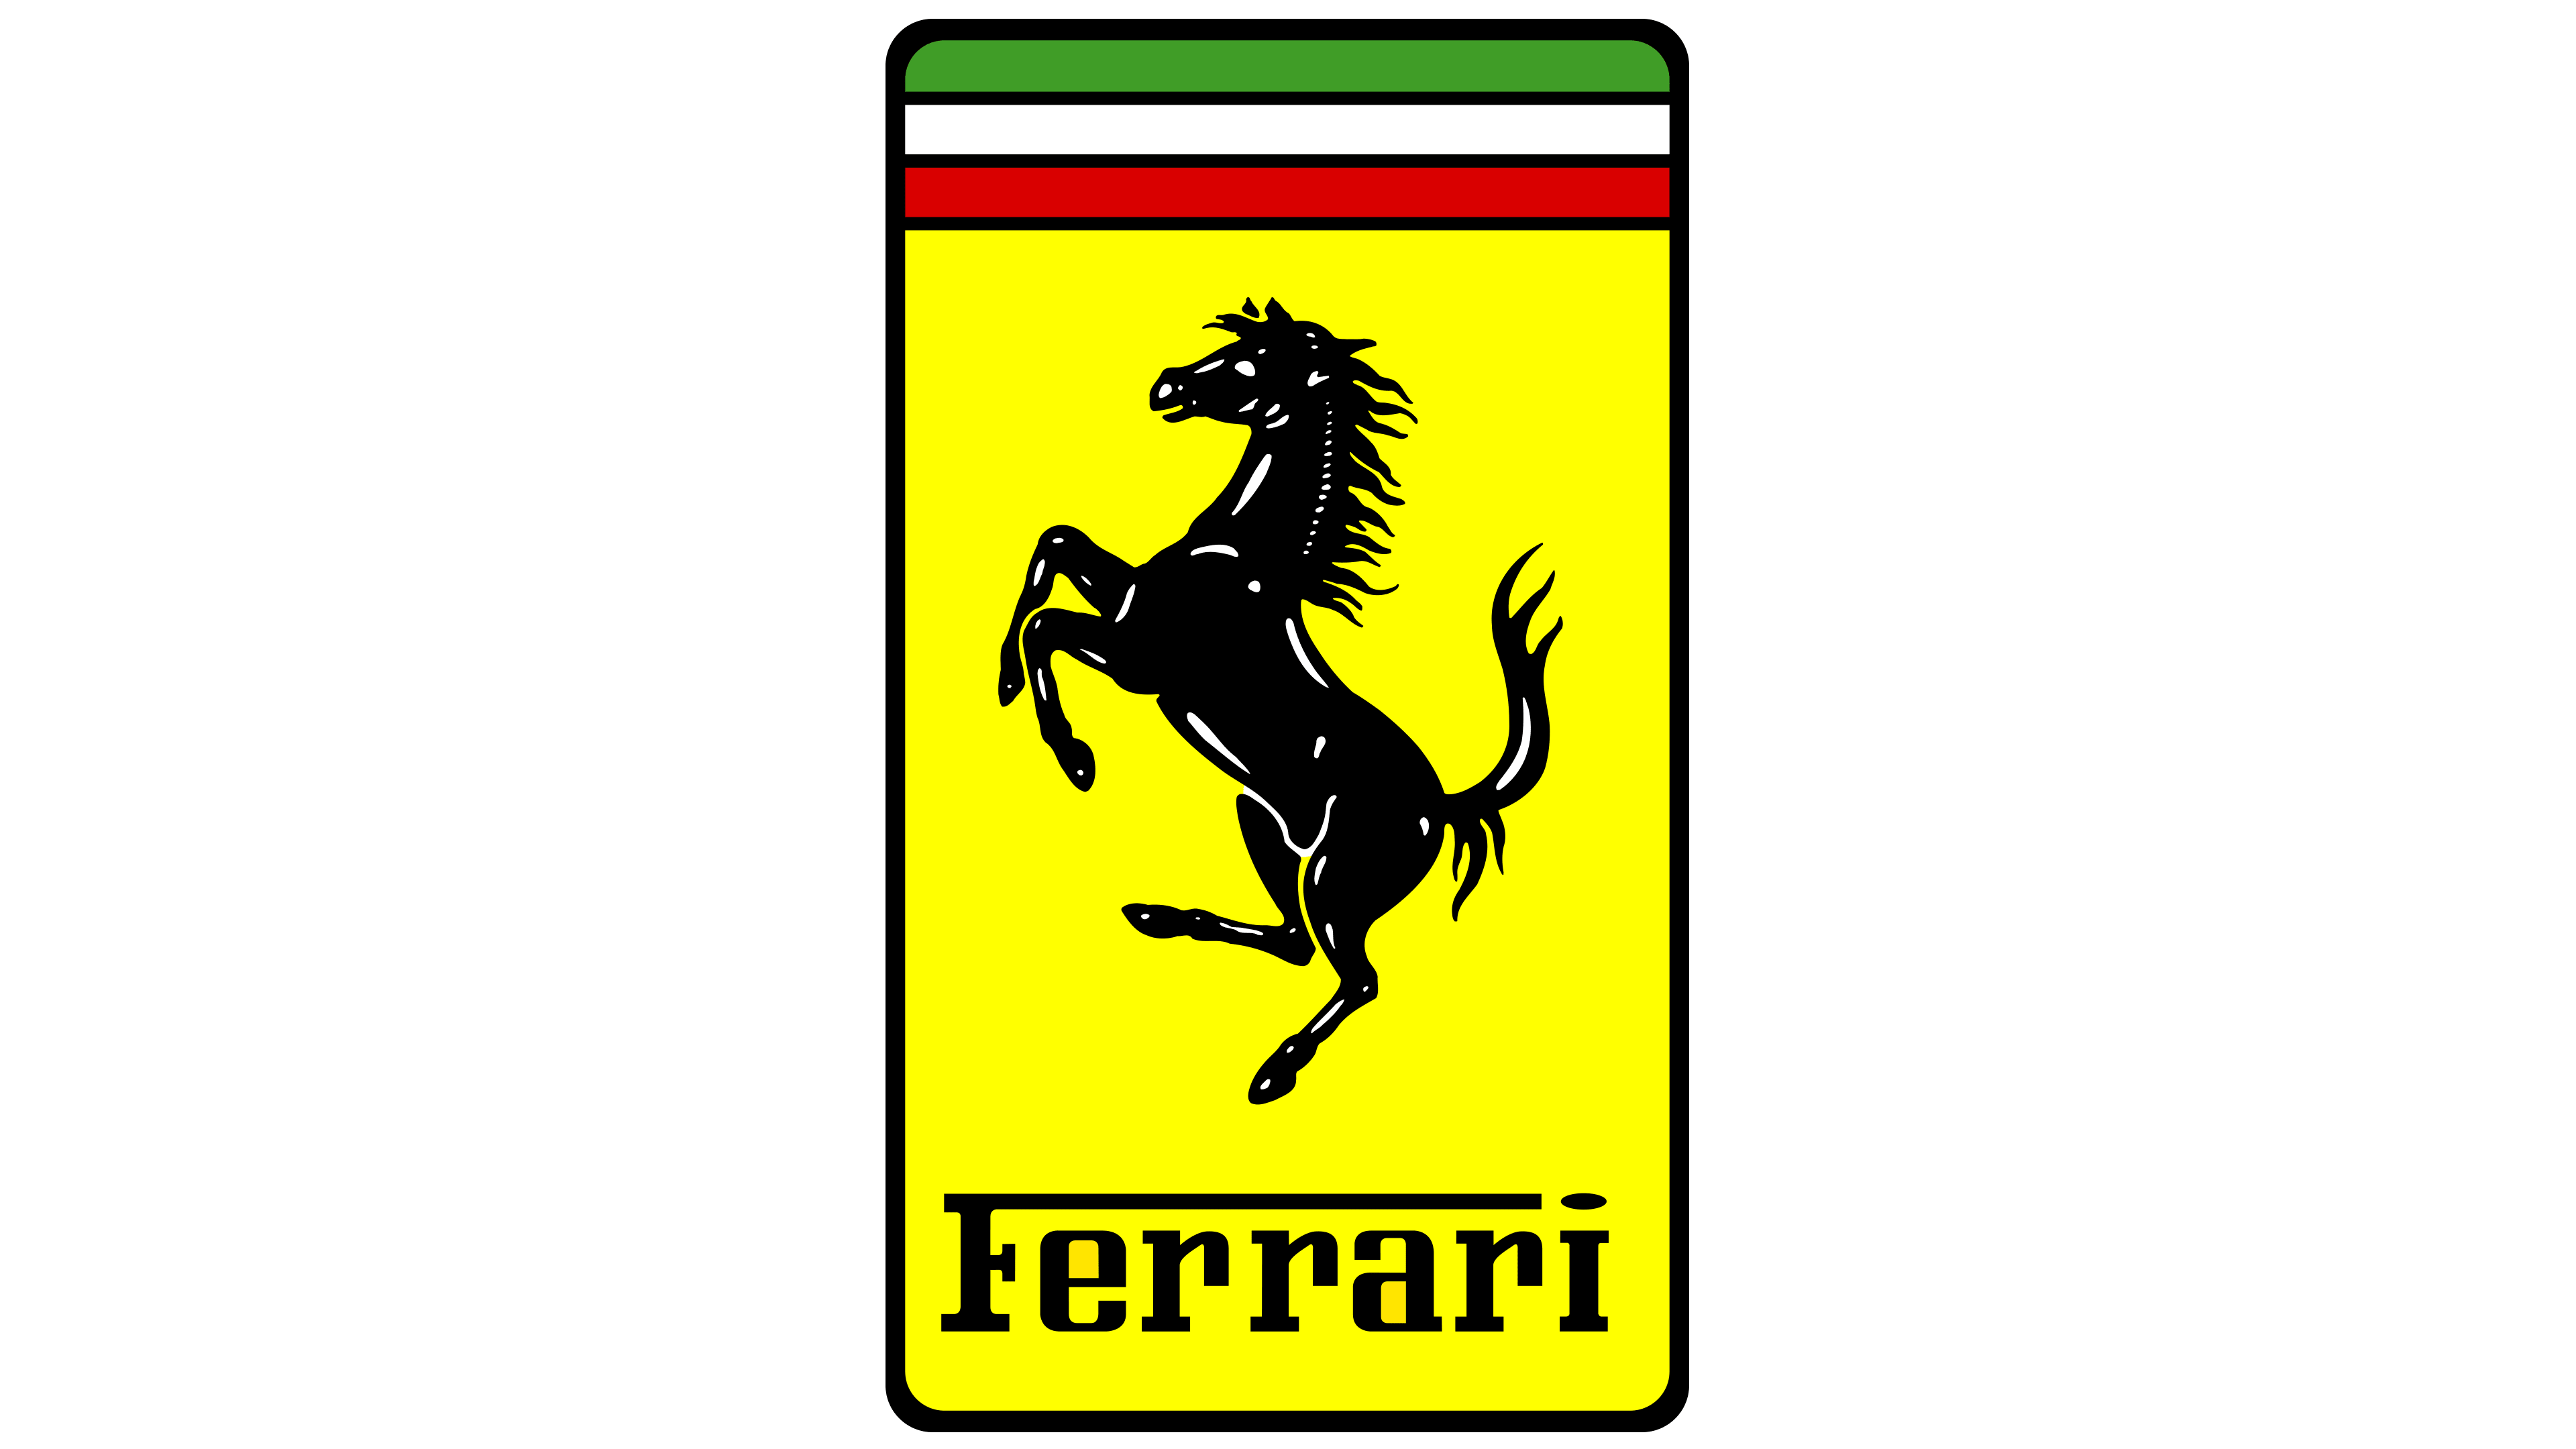 Ferrari Logowith Prancing Horse PNG image